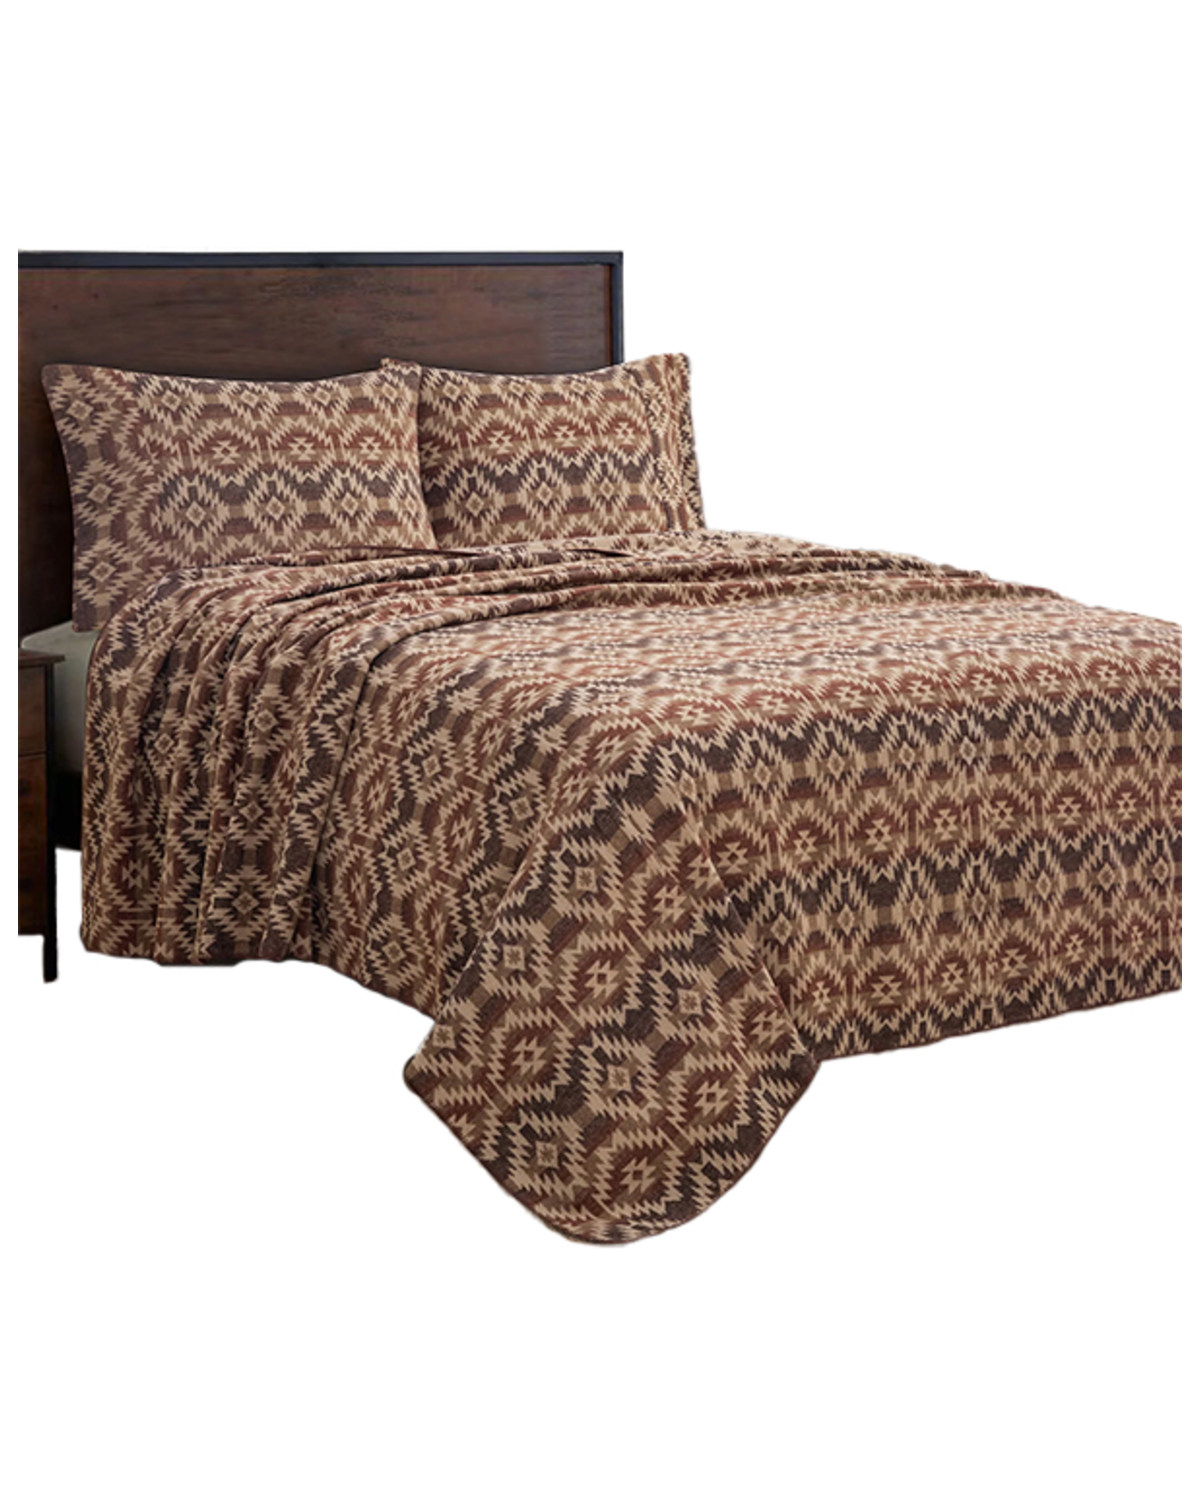 HiEnd Accents 3pc Mesa Wool Blend Blanket Set